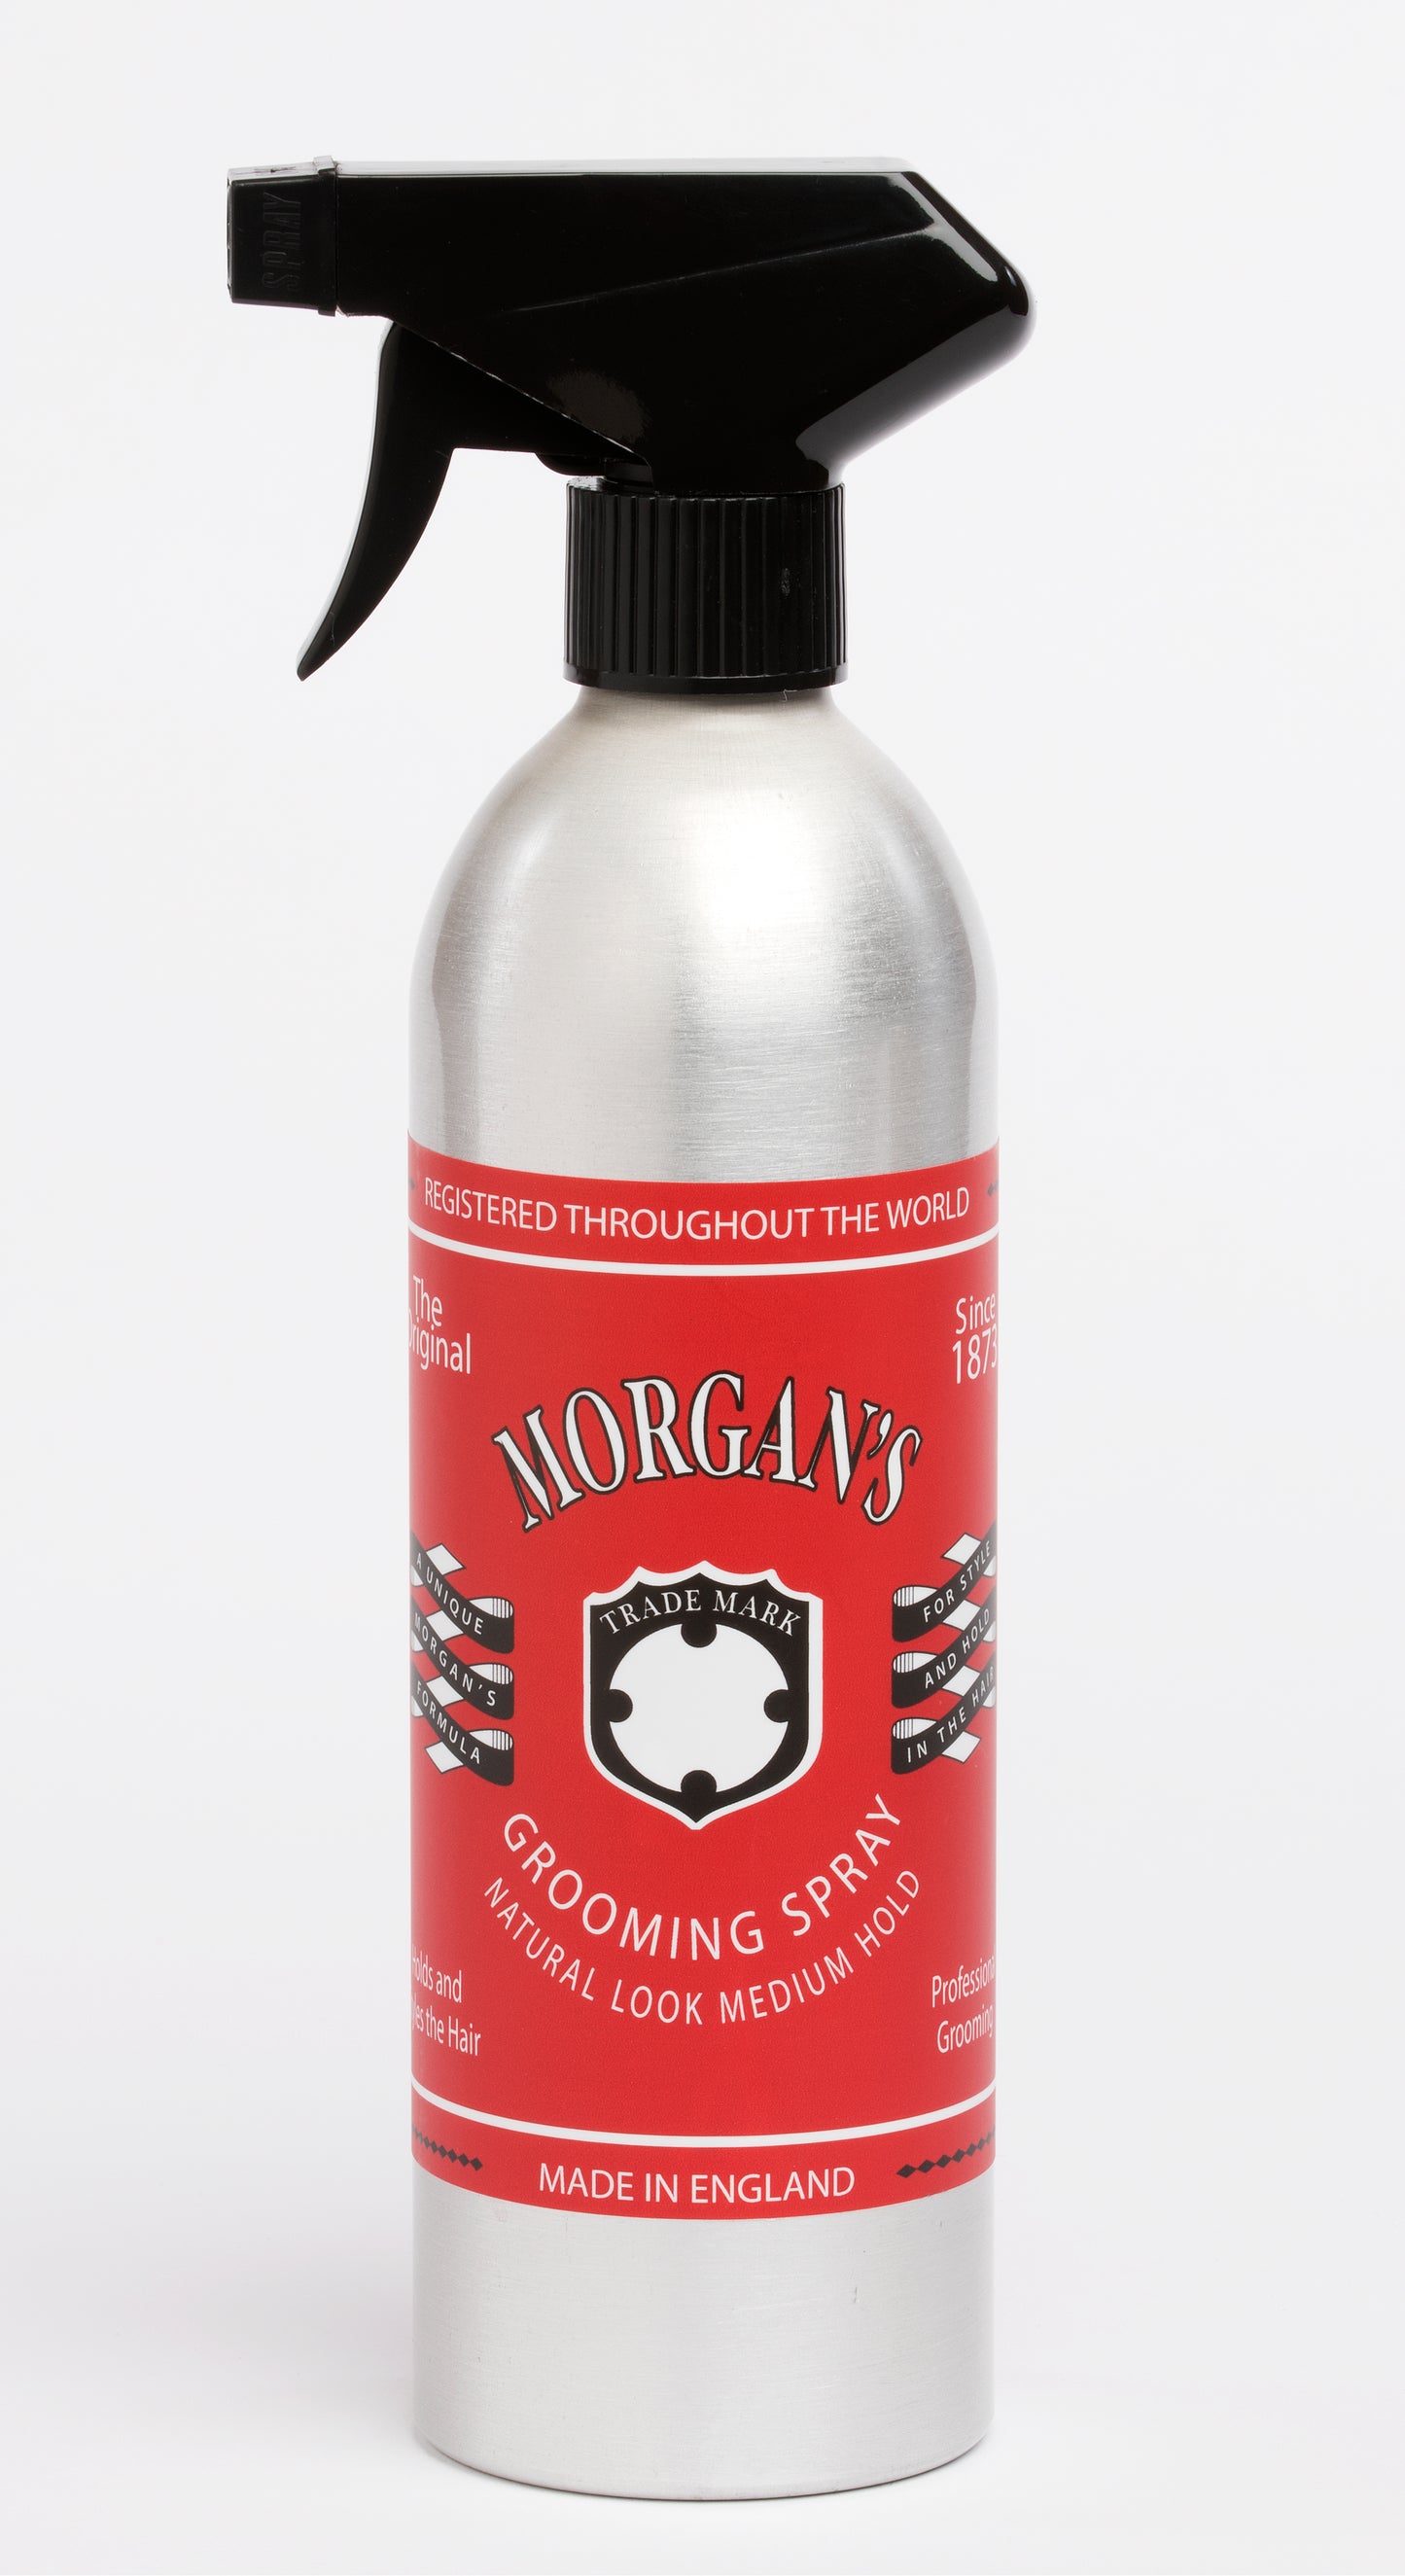 Morgan's Grooming Spray